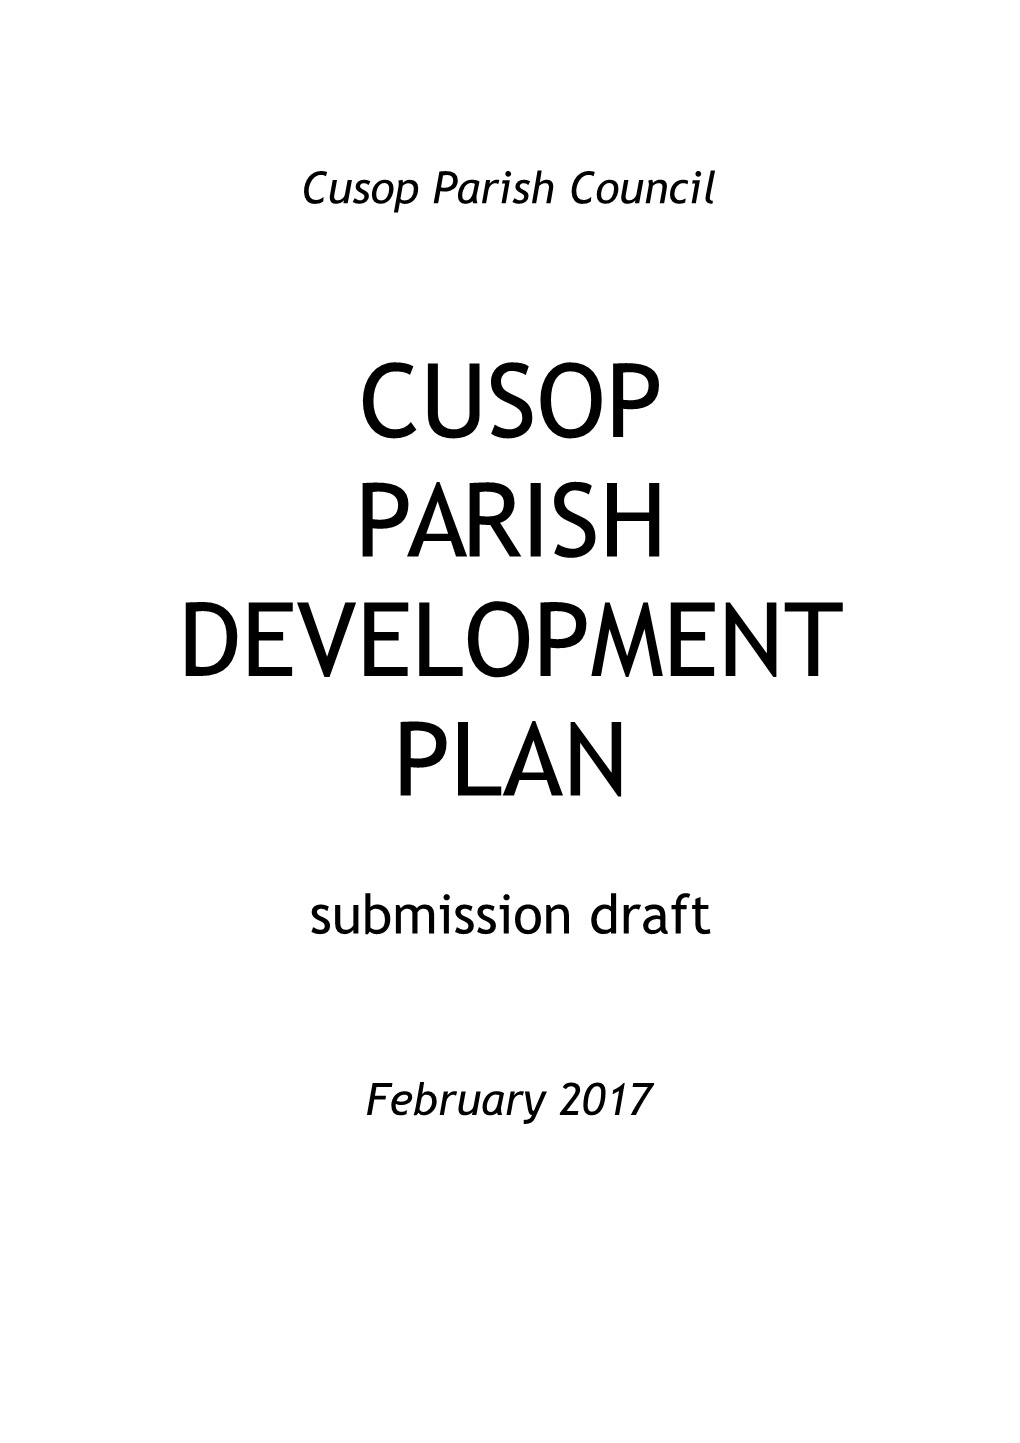 Cusop Parish Development Plan